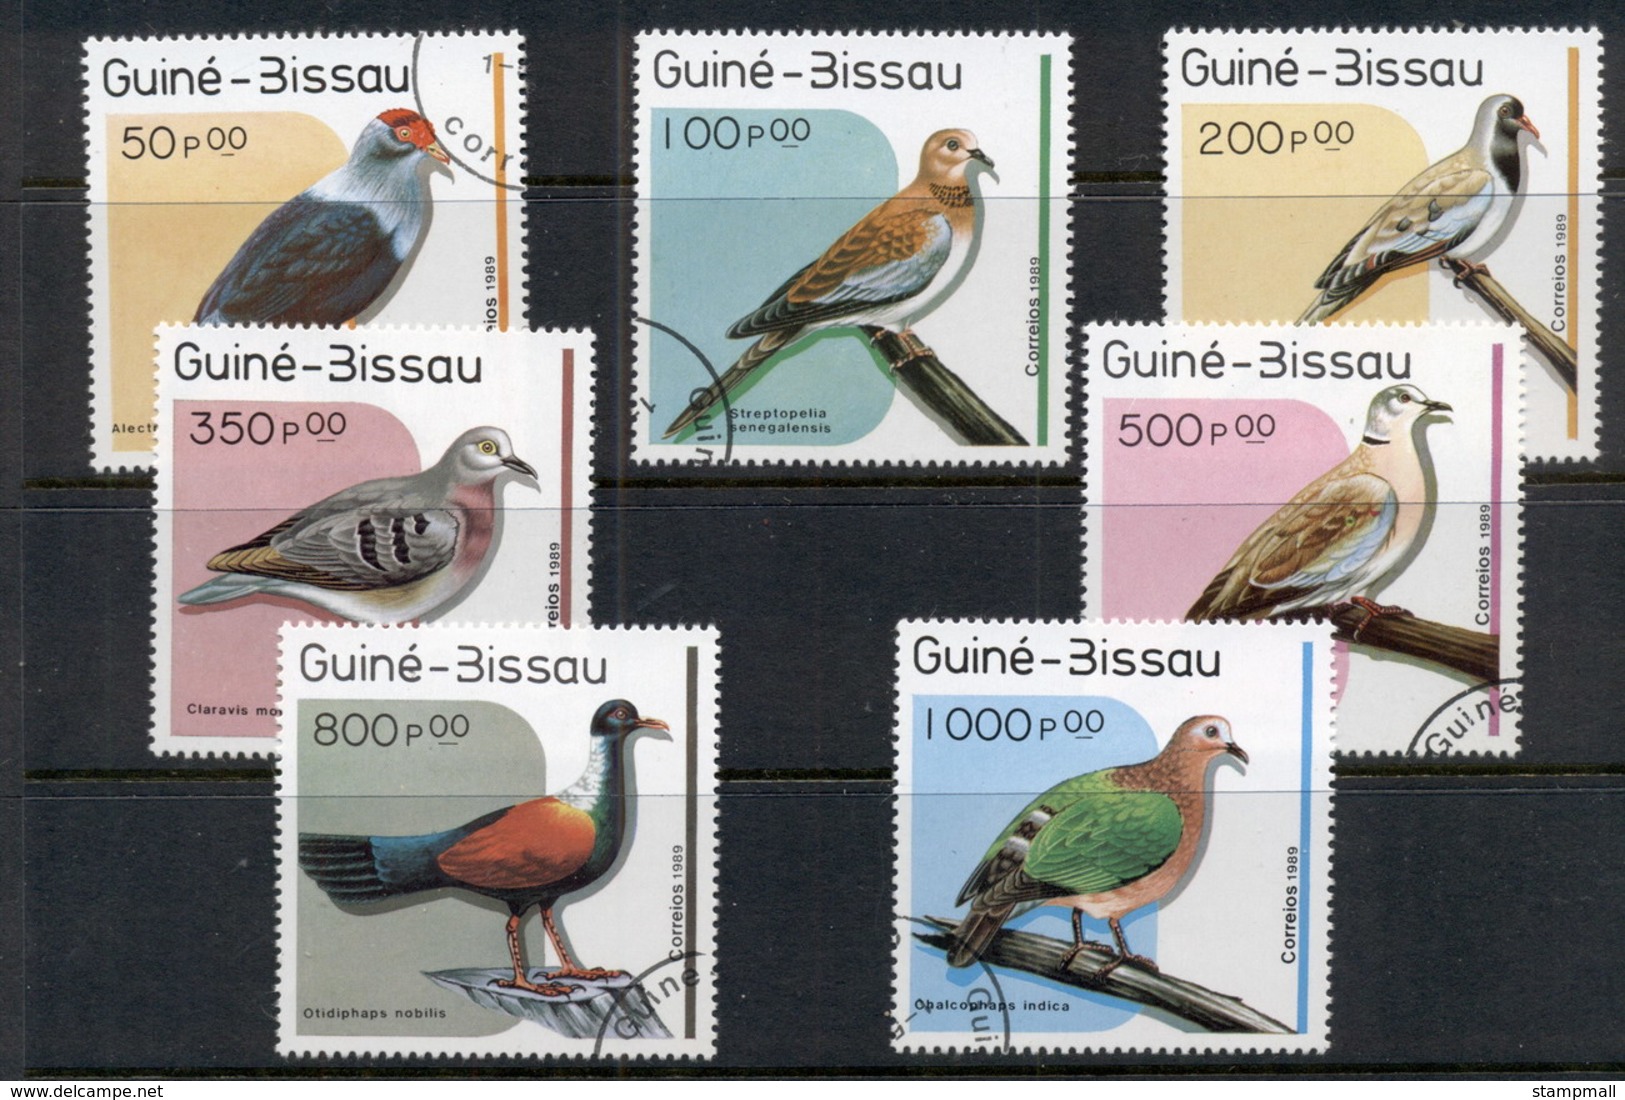 Guinea Bissau 1989 Birds CTO - Guinea-Bissau